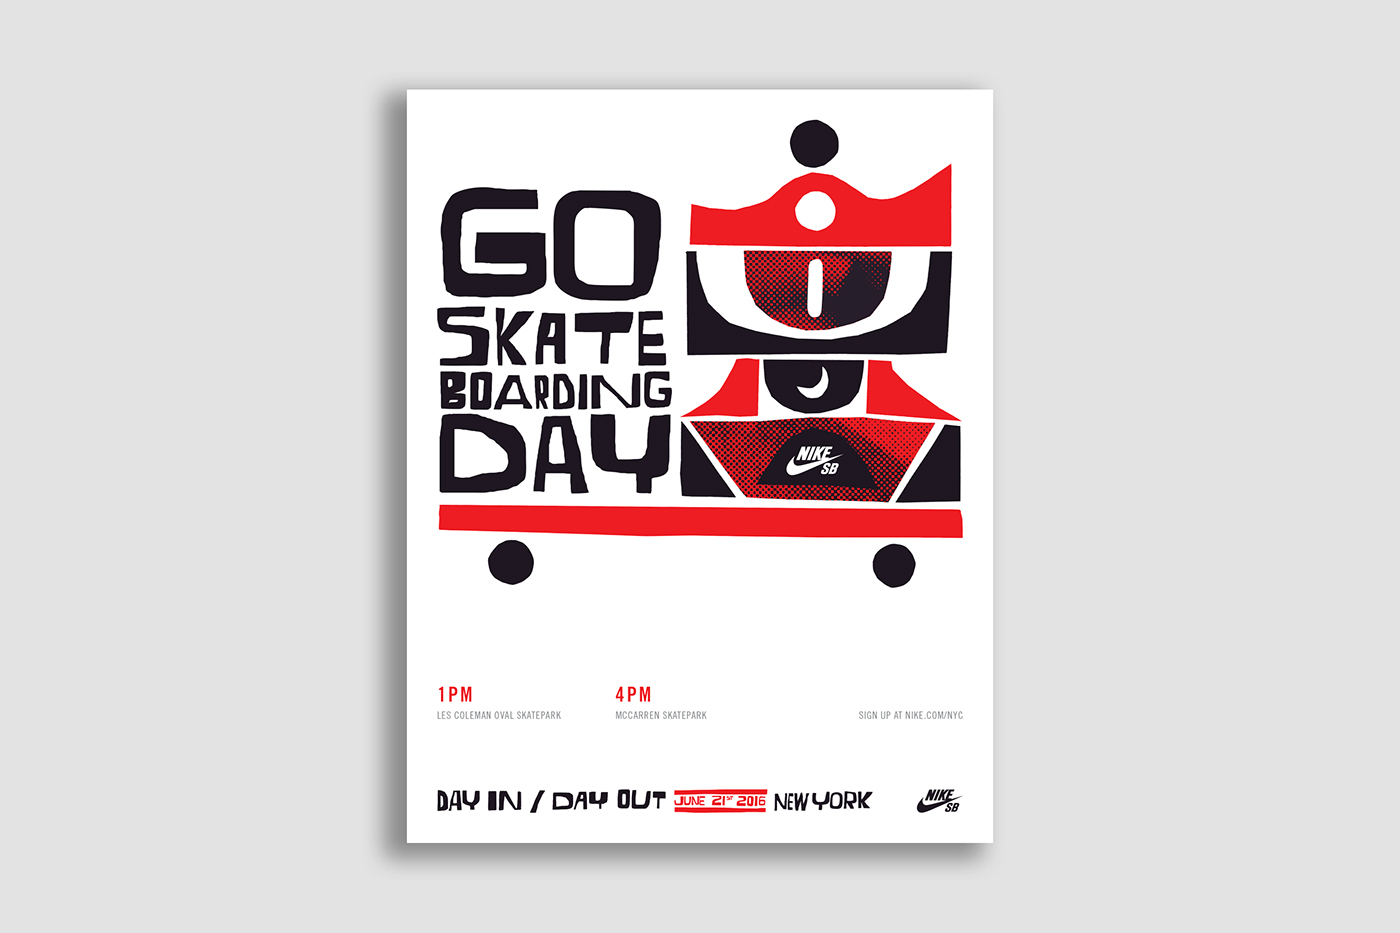 Nike skateboarding shoe box Packaging print Invitation